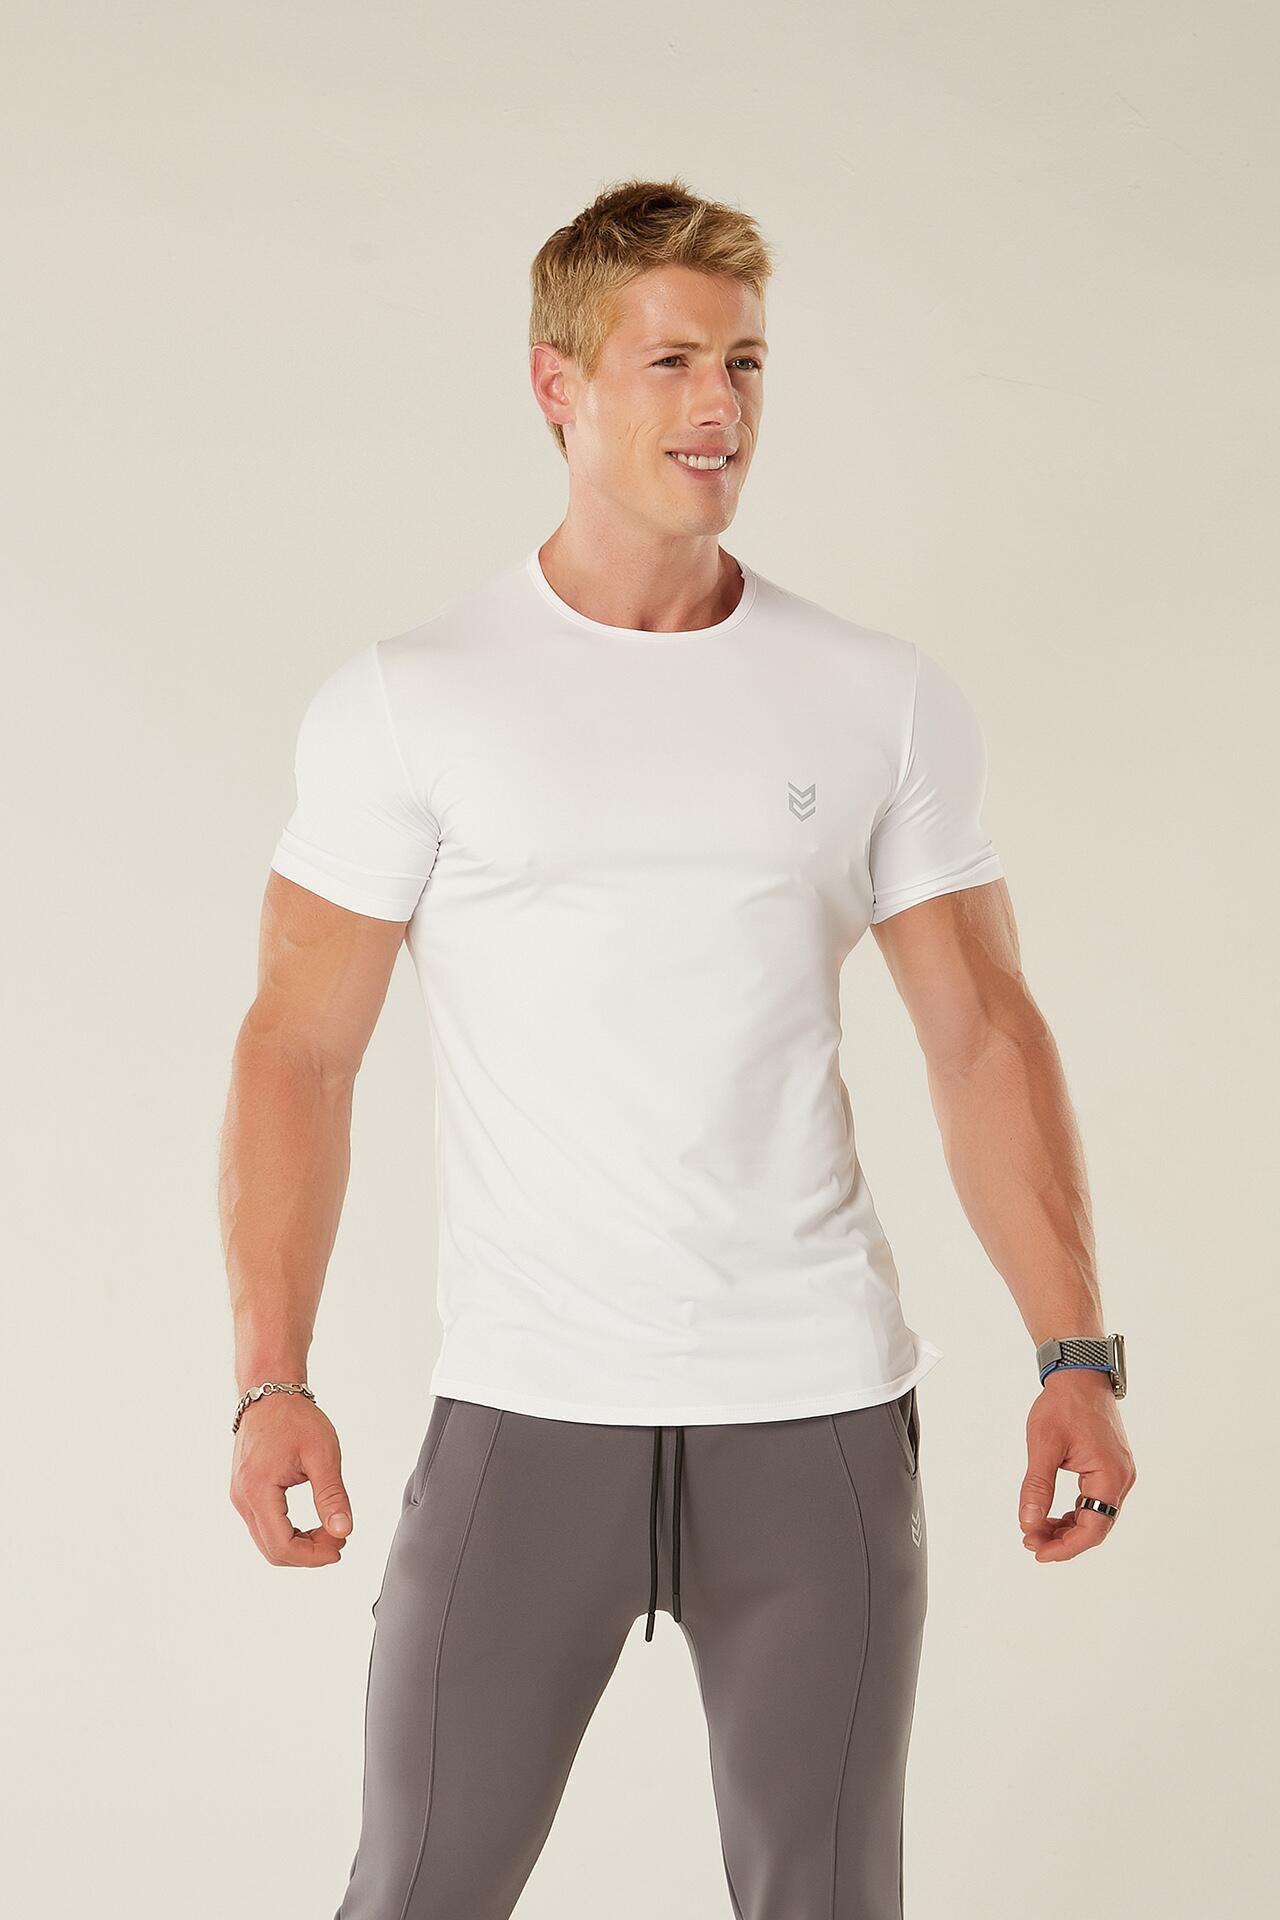 Comprar Camiseta Dry Fit Athleisure Branca - ARMYBR